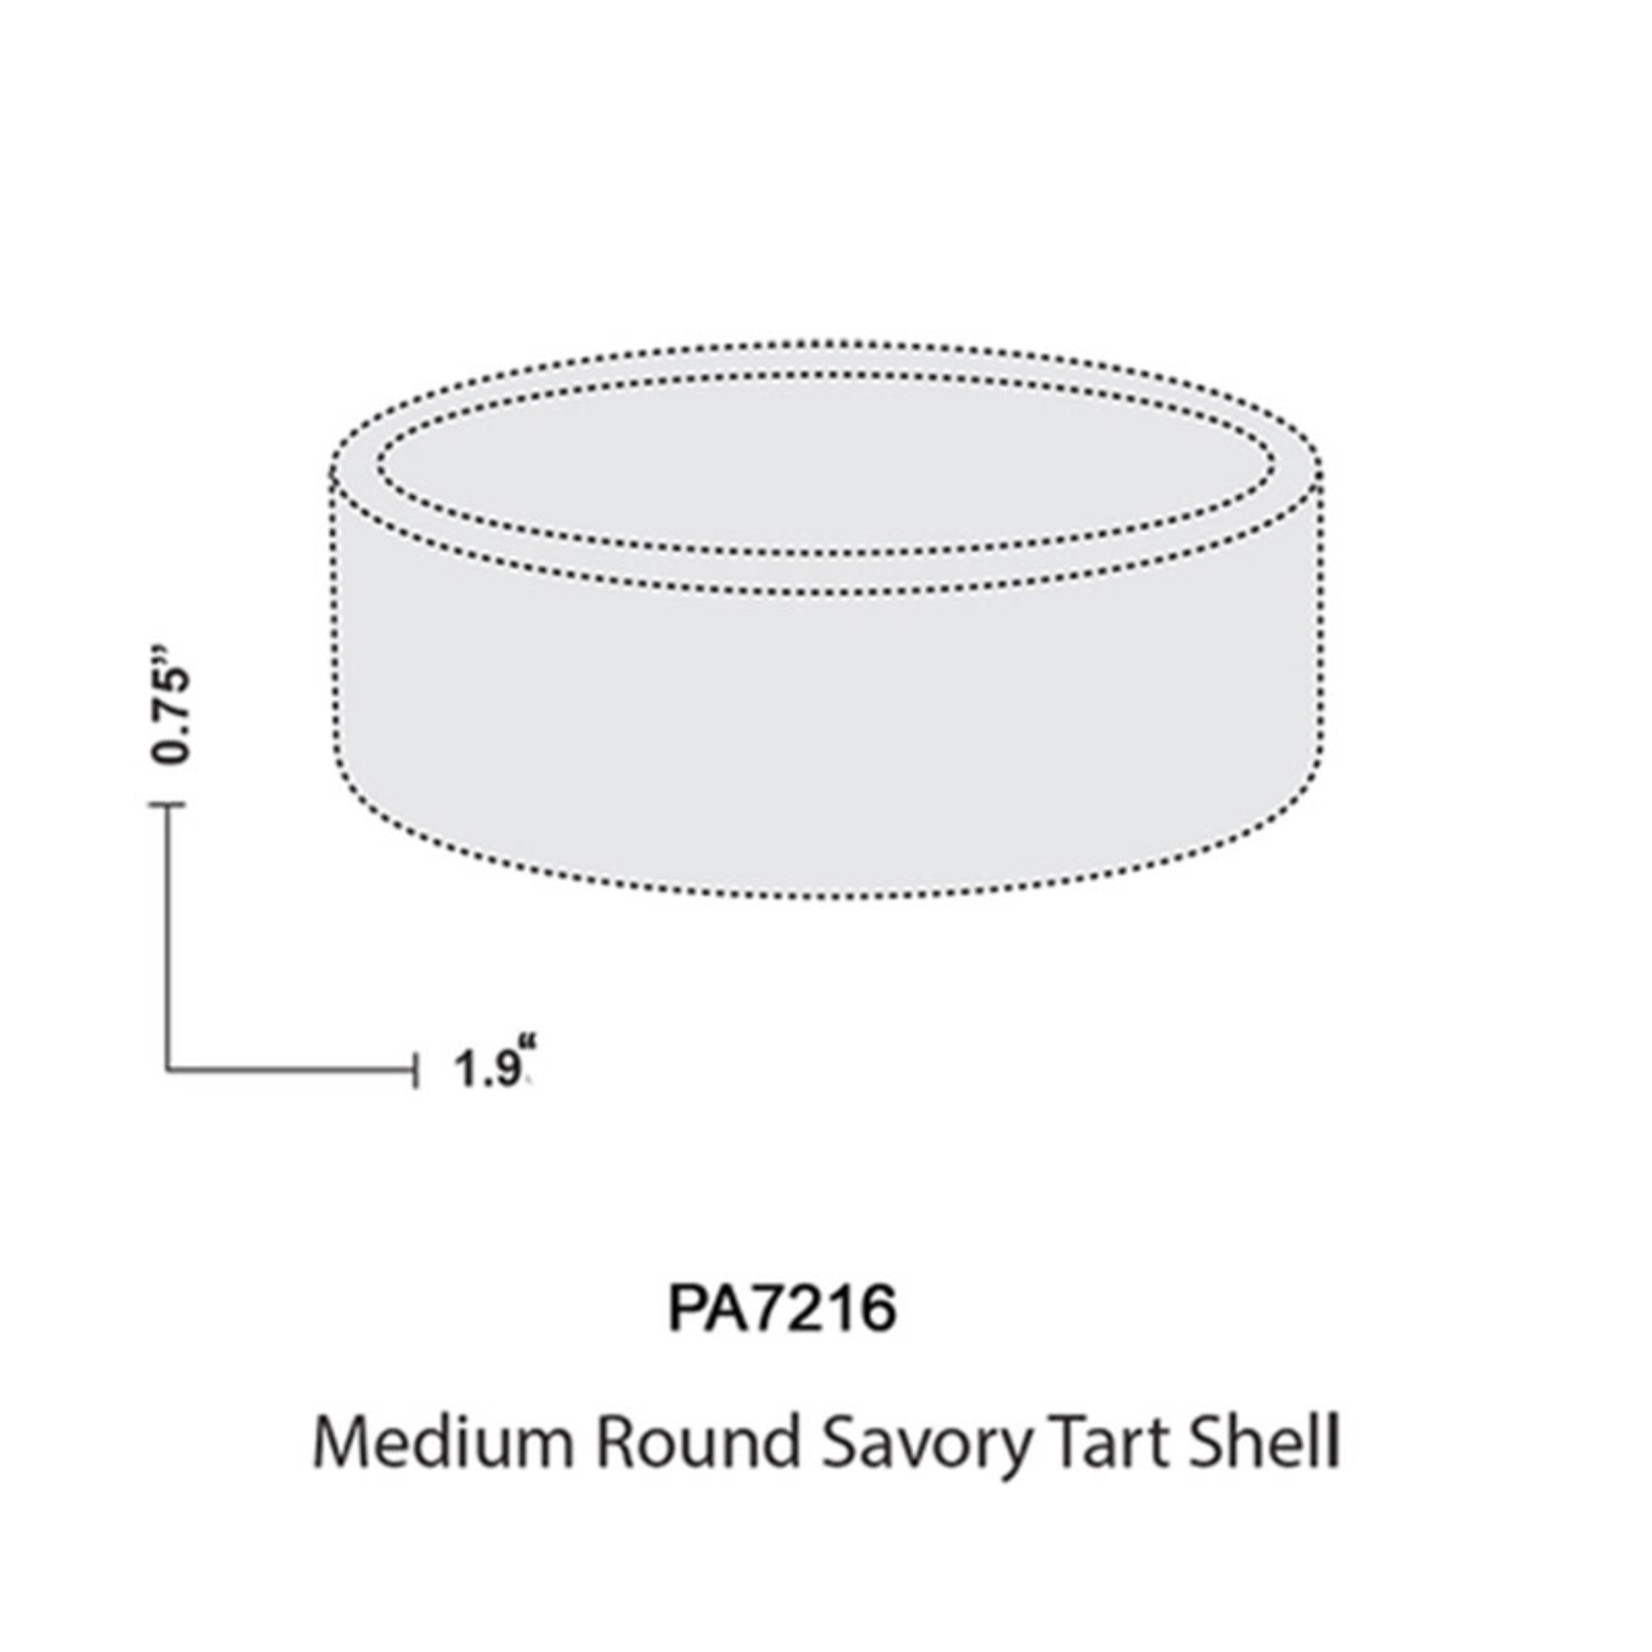 Moda Moda - Tart shell, Savory round - 1.9" (144 ct), PA7216